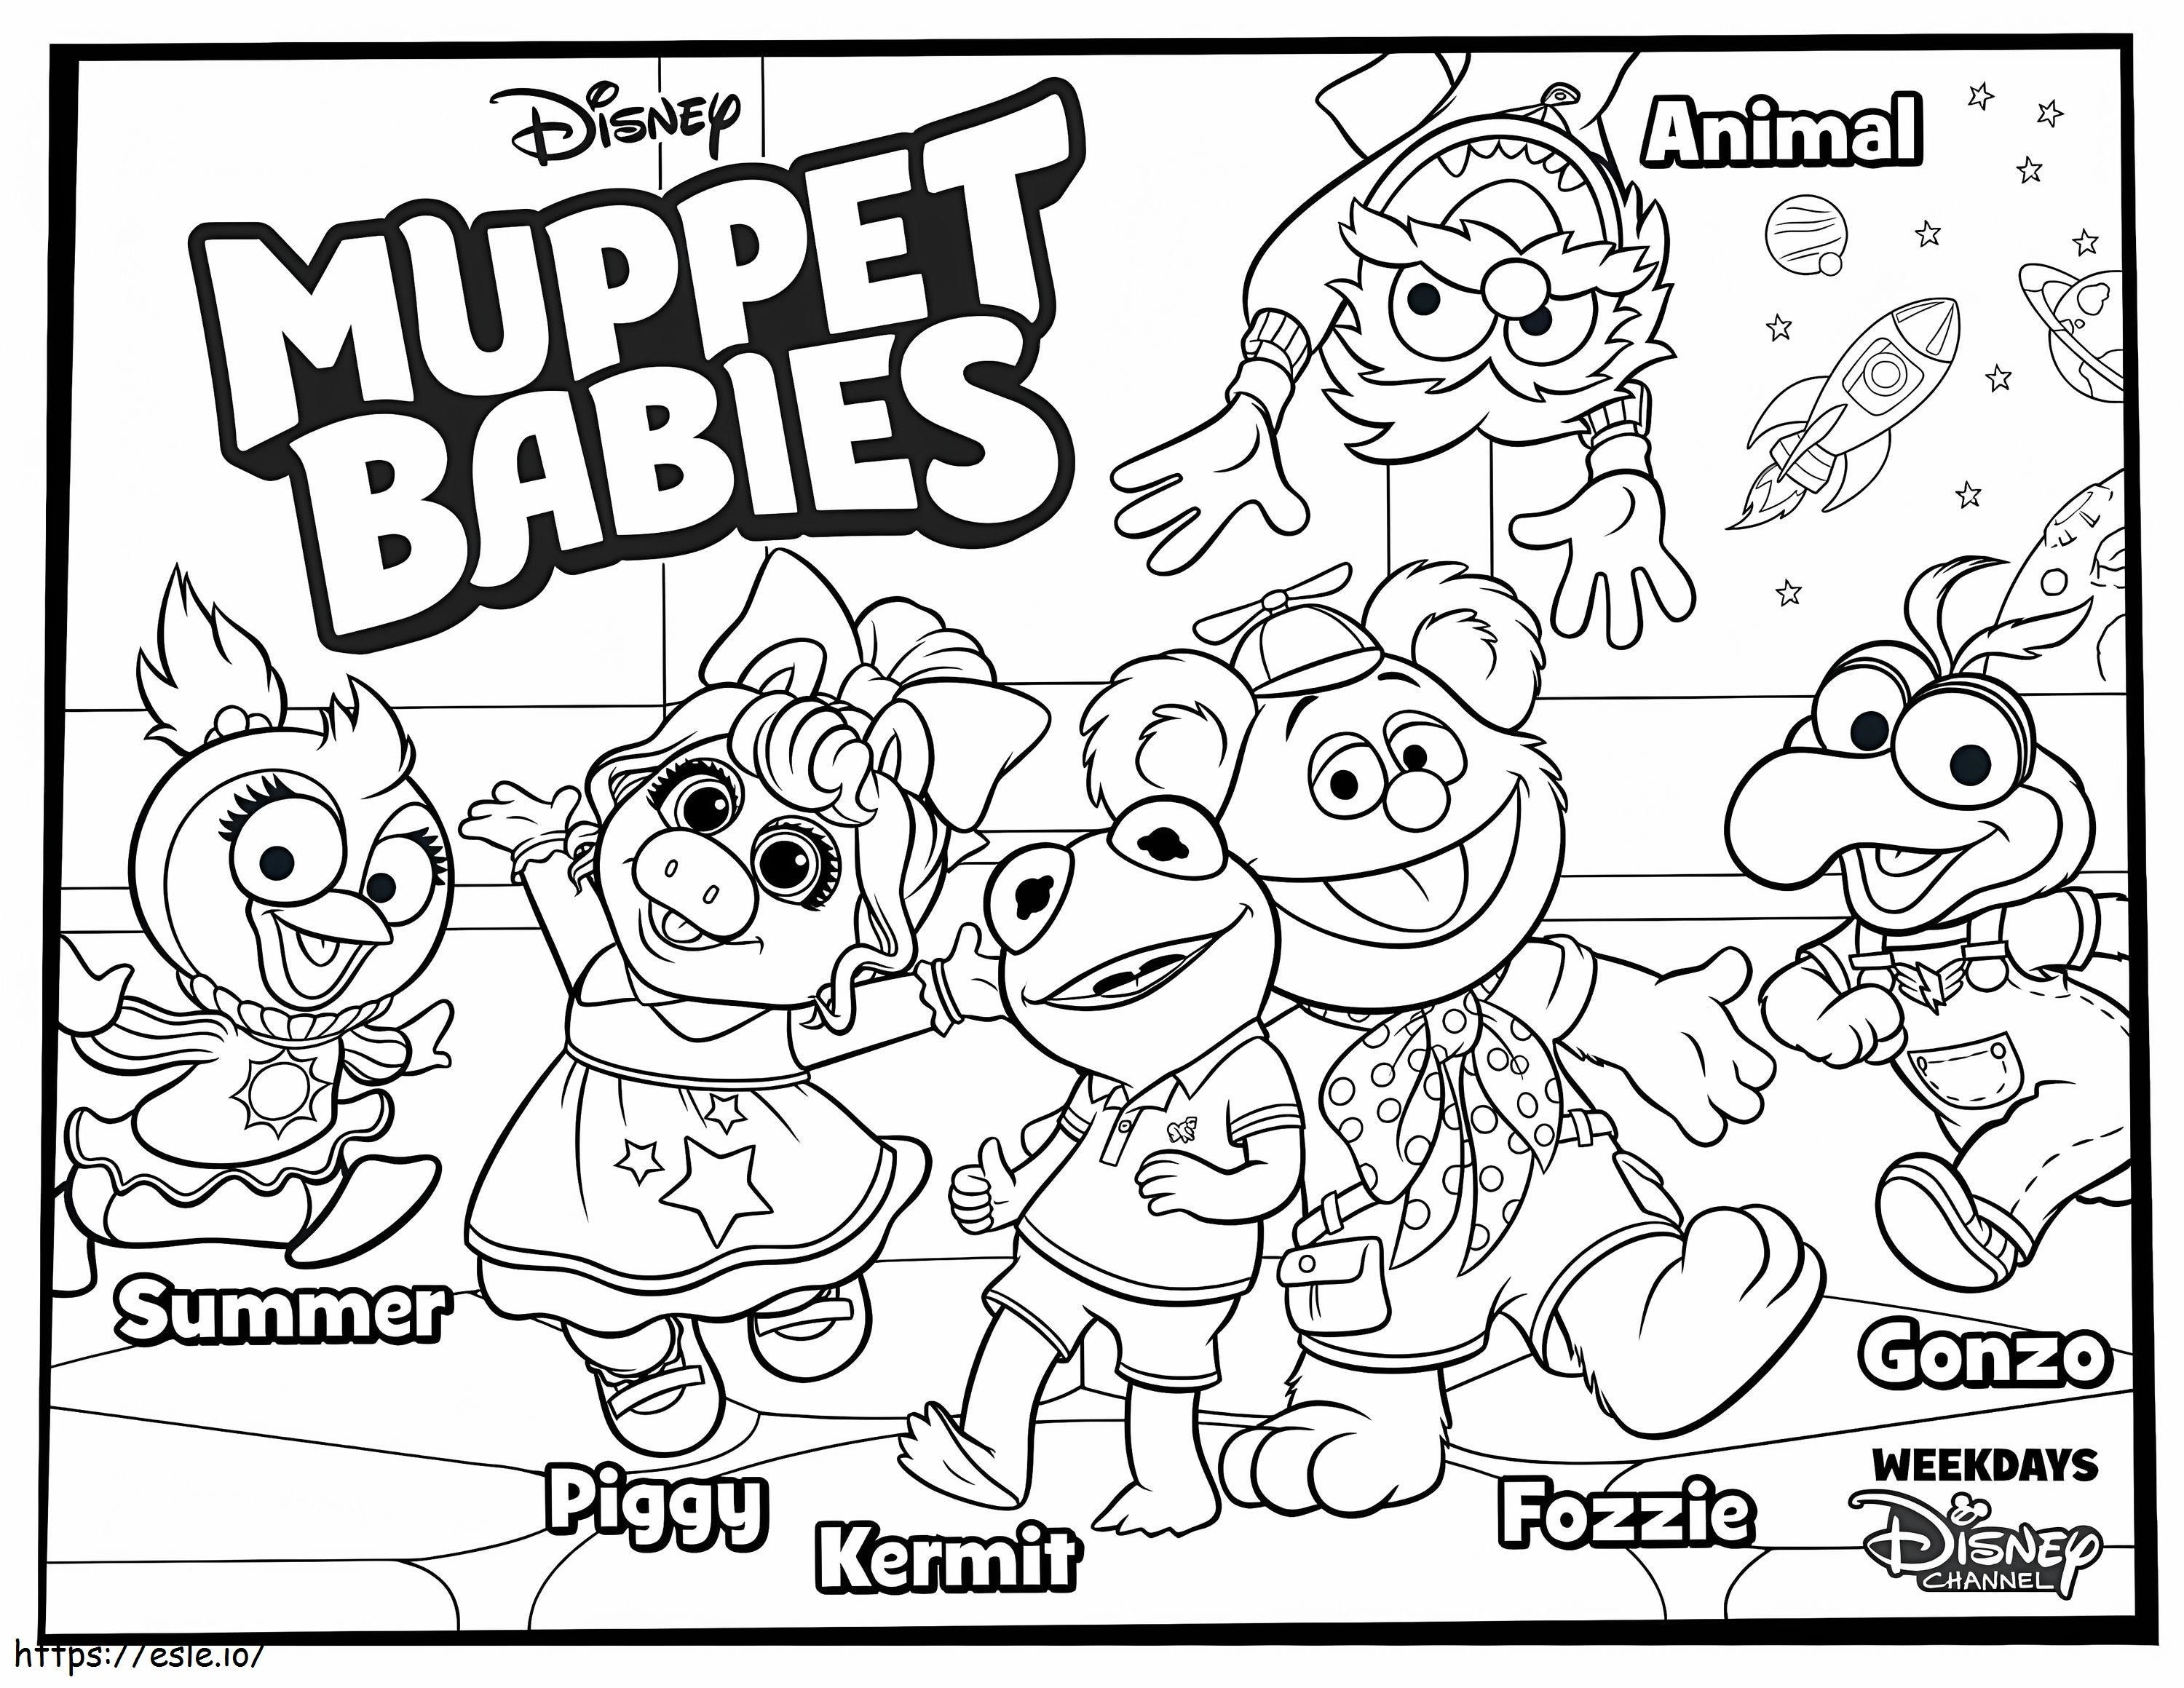 Muppet Babies ausmalbilder